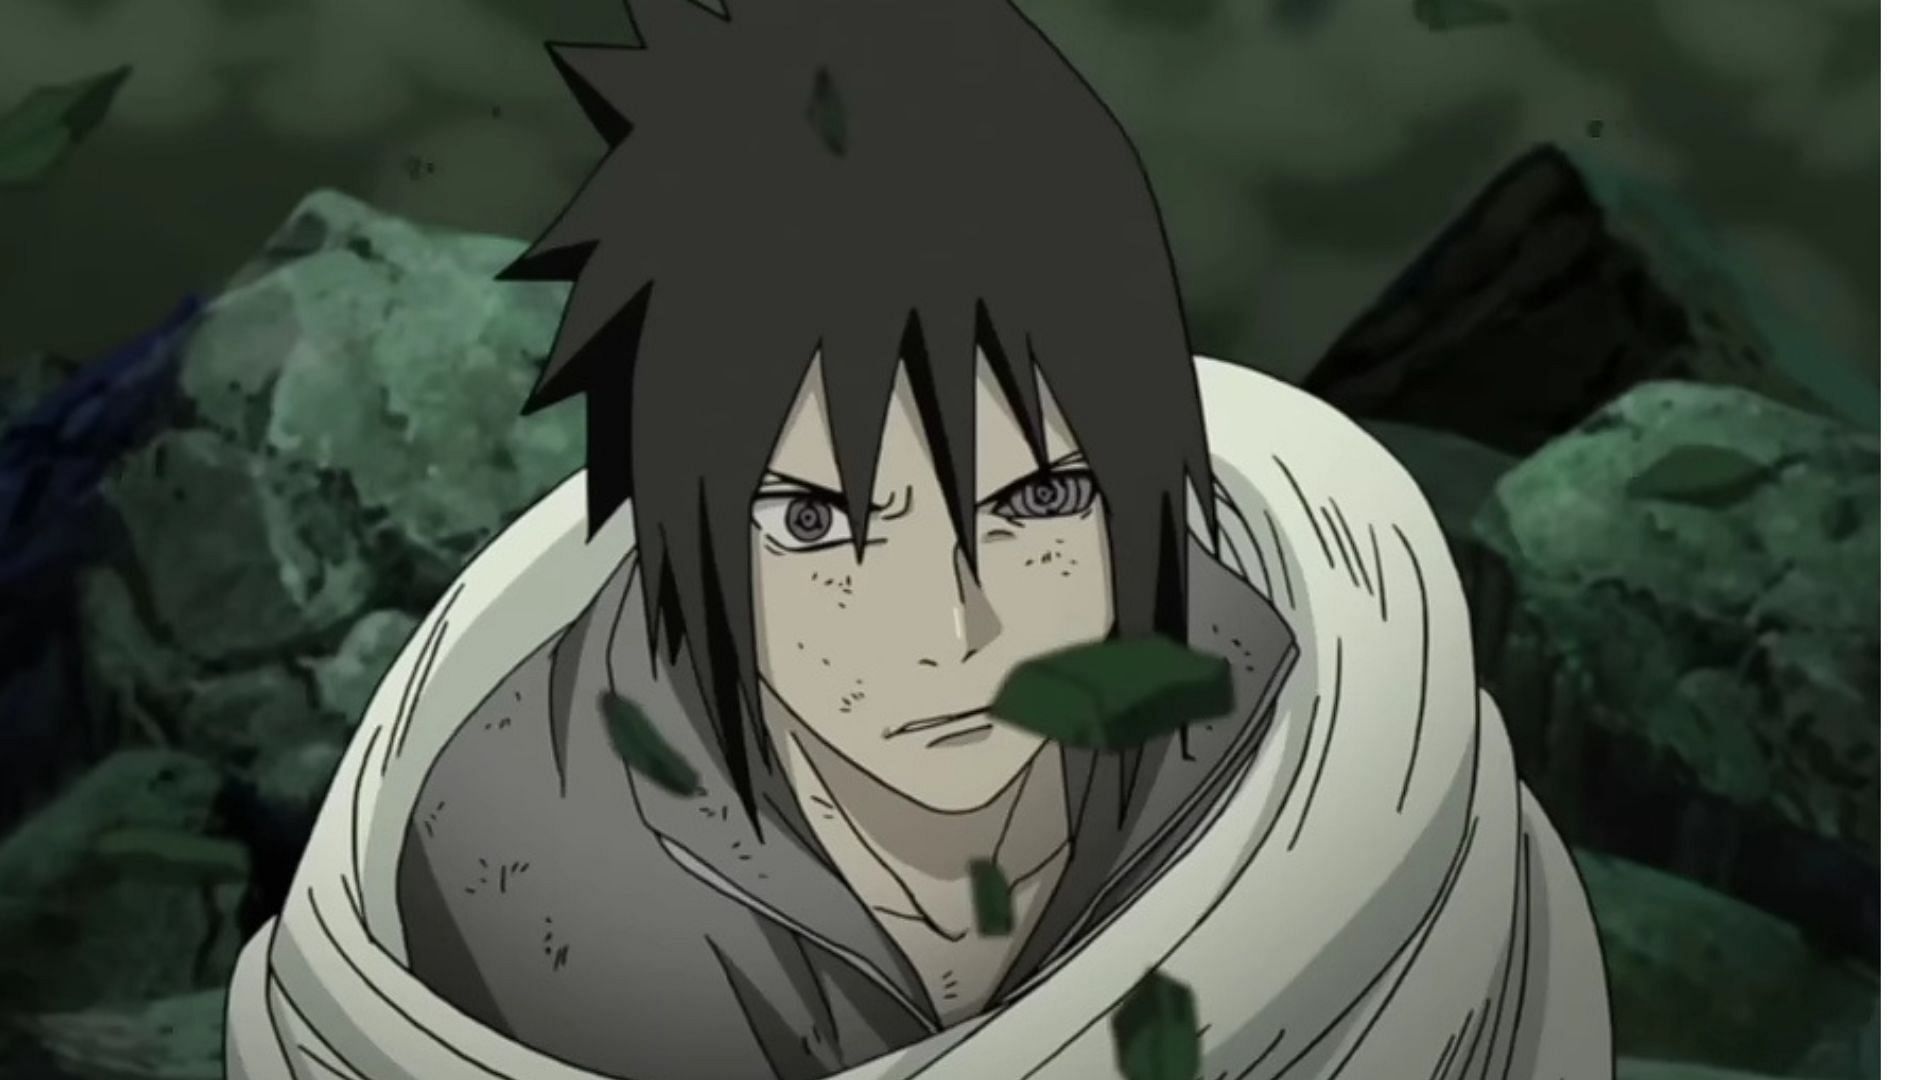 Sasuke Aus Dem Anime Naruto (Bild Von Studio Pierrot)